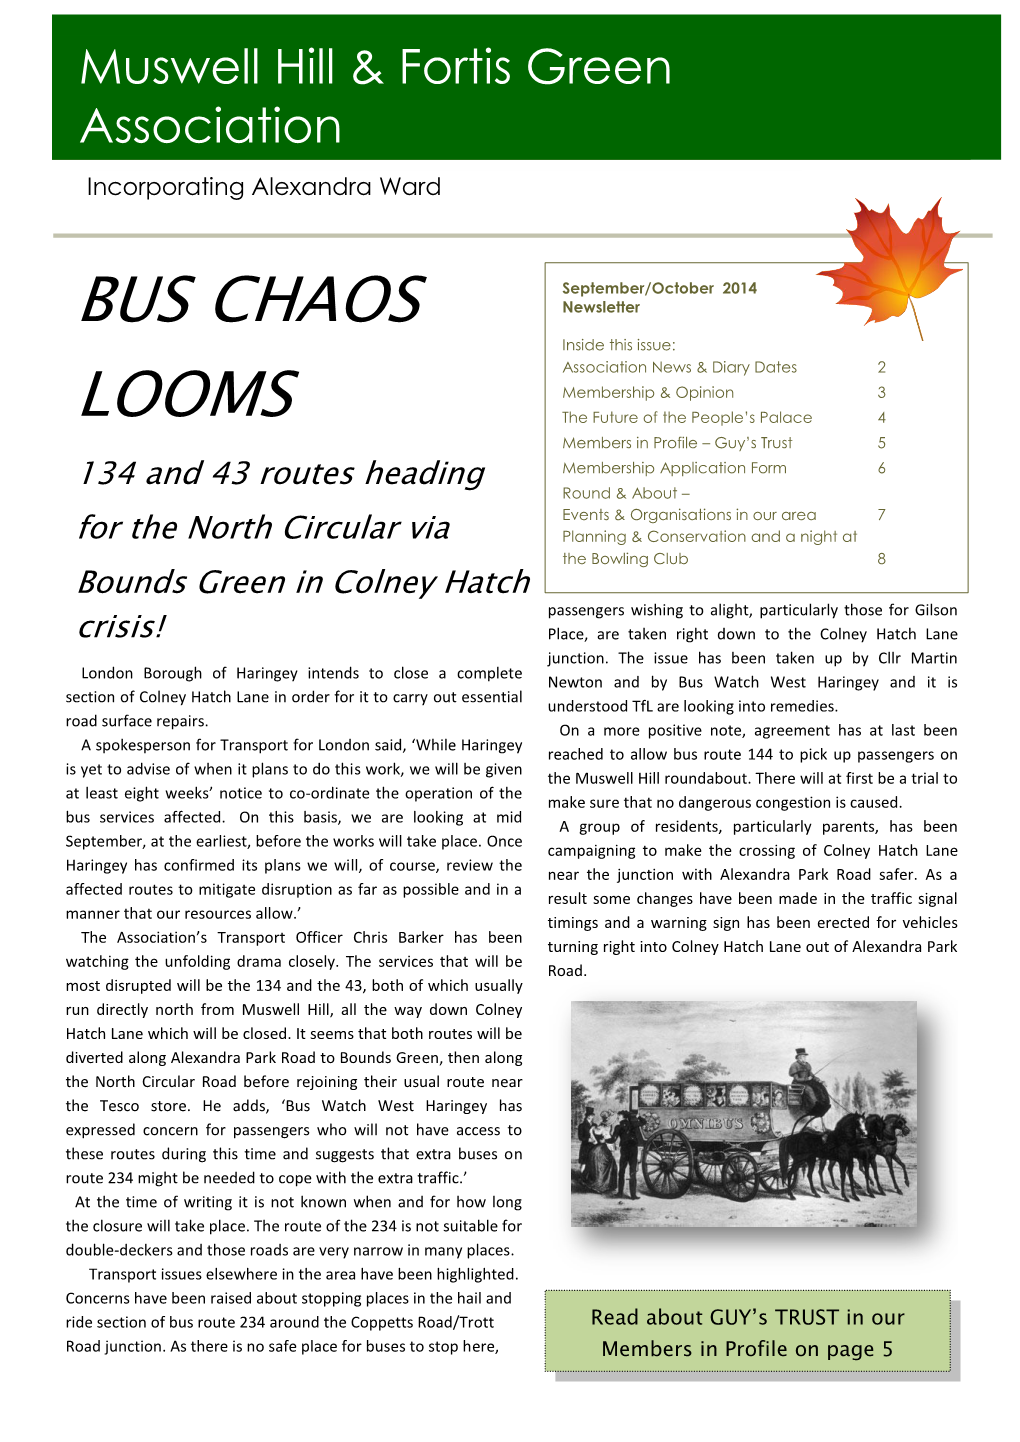 Bus Chaos Looms